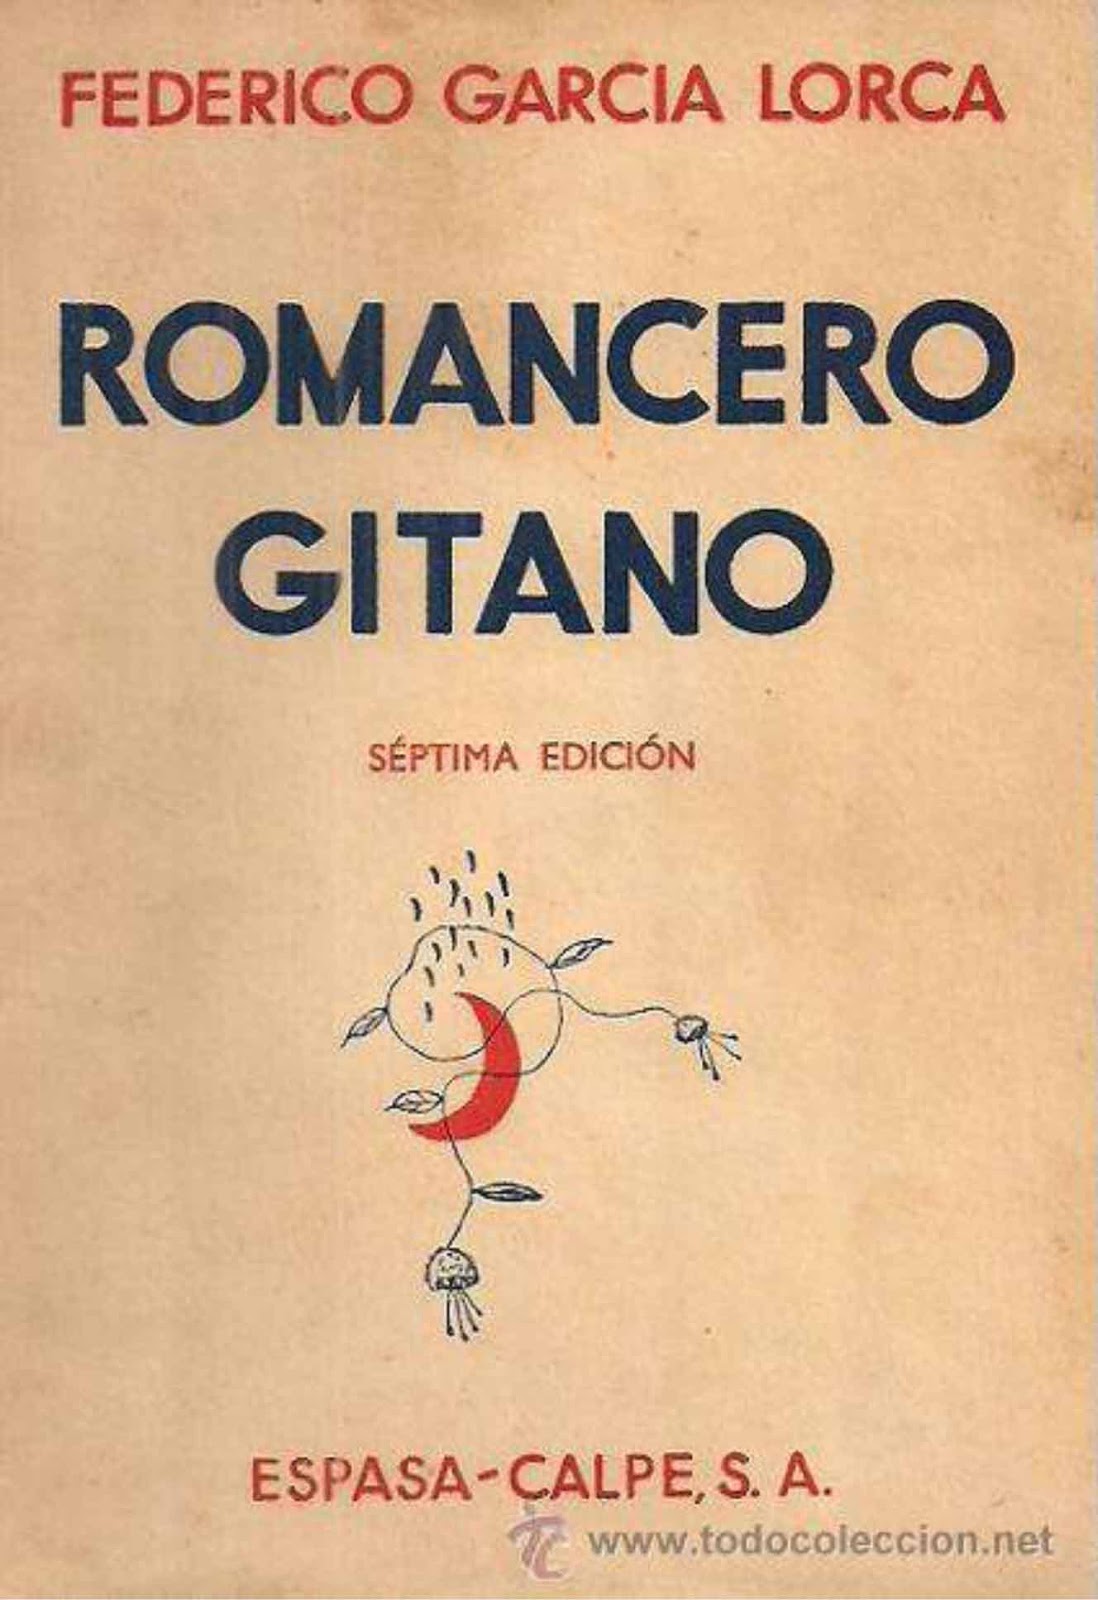 Resultado de imagen para romancero gitano edición 1932